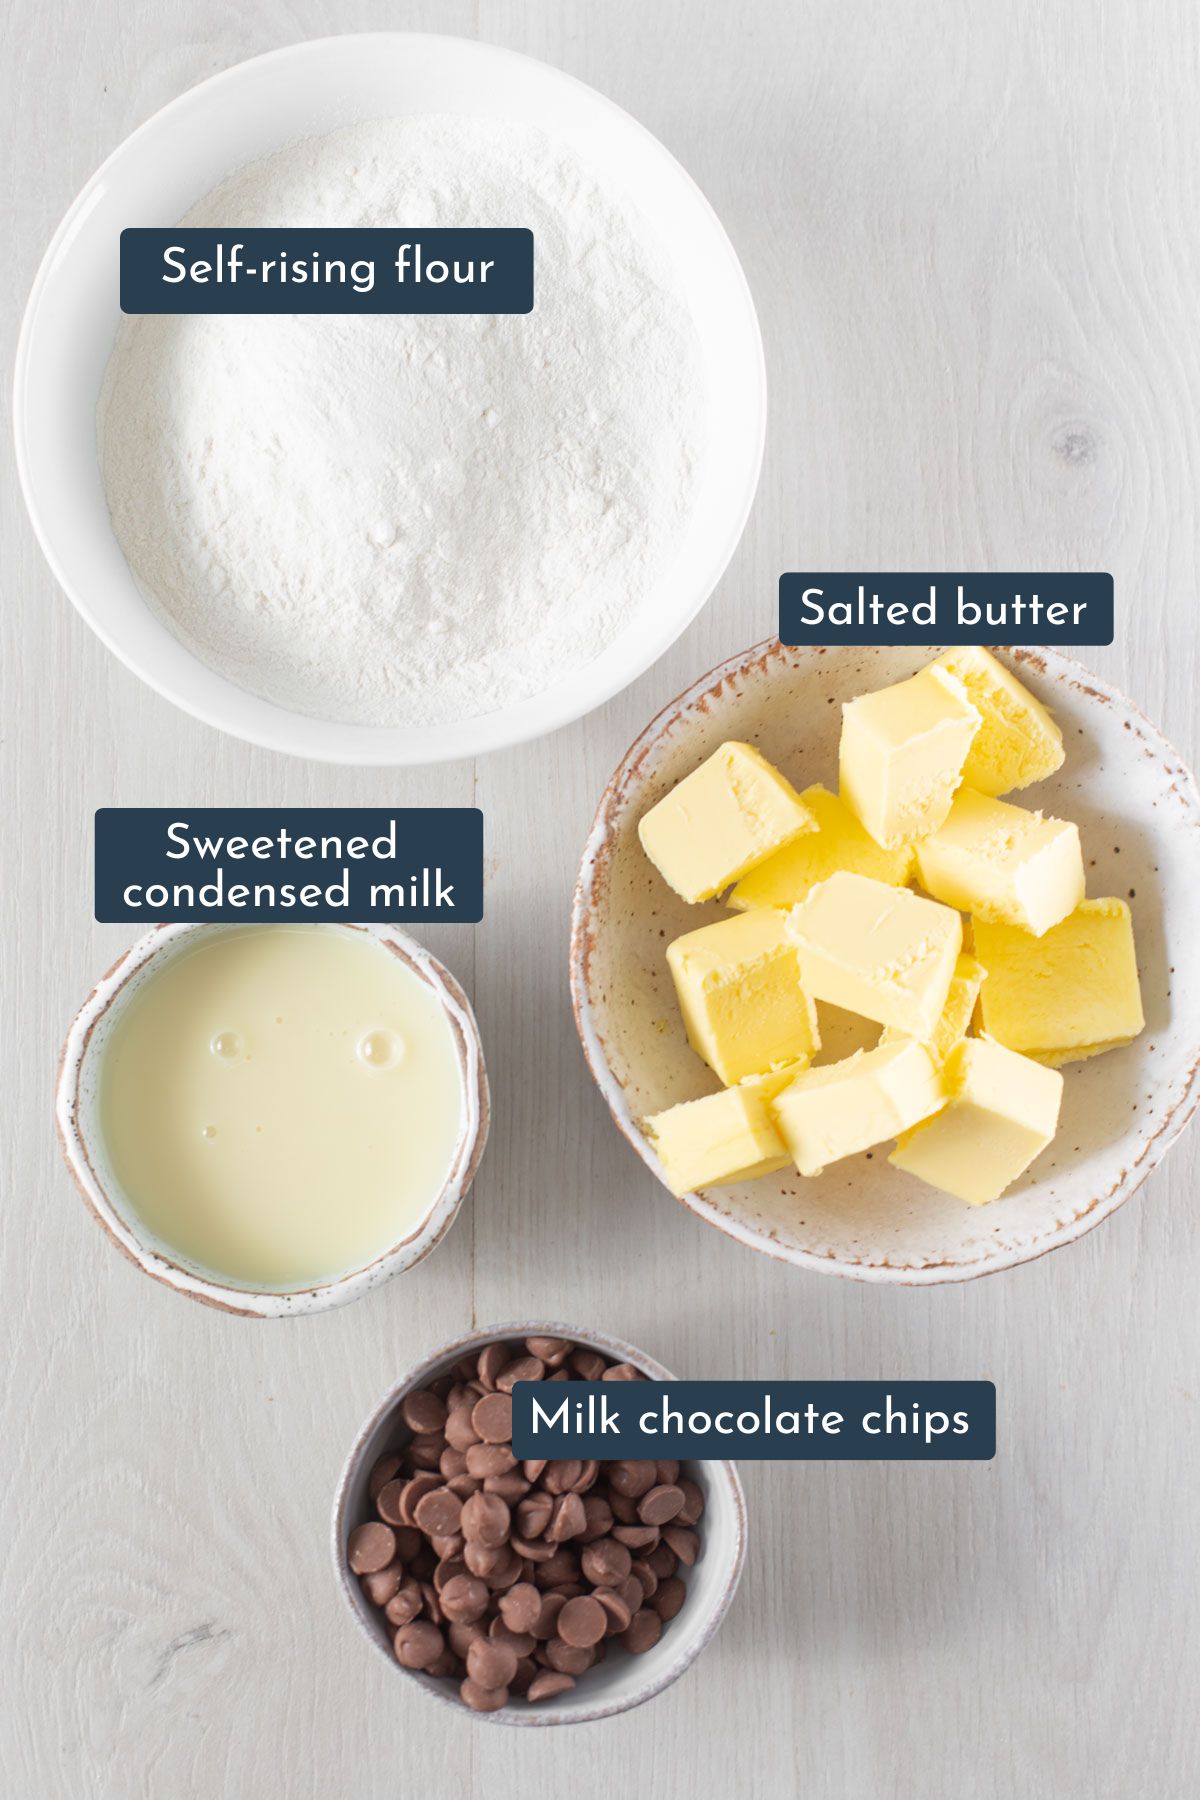 Ingredients to make condensed milk cookies are self-rising flour, salted butter, sweetened condensed milk, milk chocolate chips